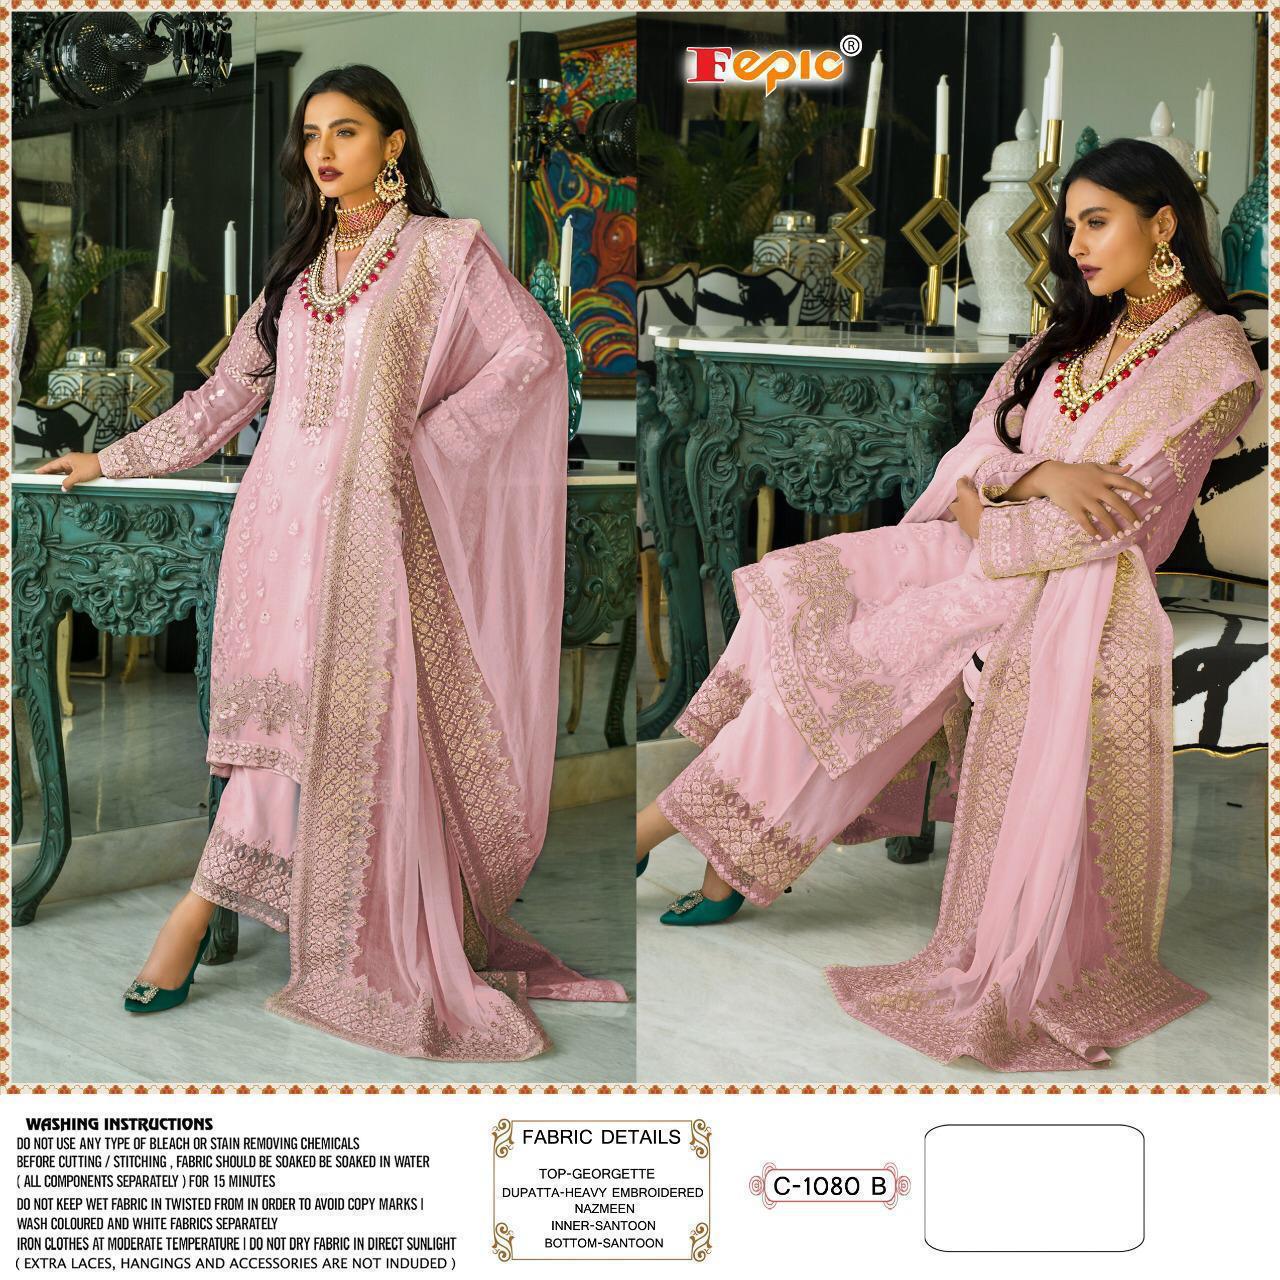 FEPIC ROSEMEEN C 1080 B PINK PAKISTANI DRESSES IN INDIA